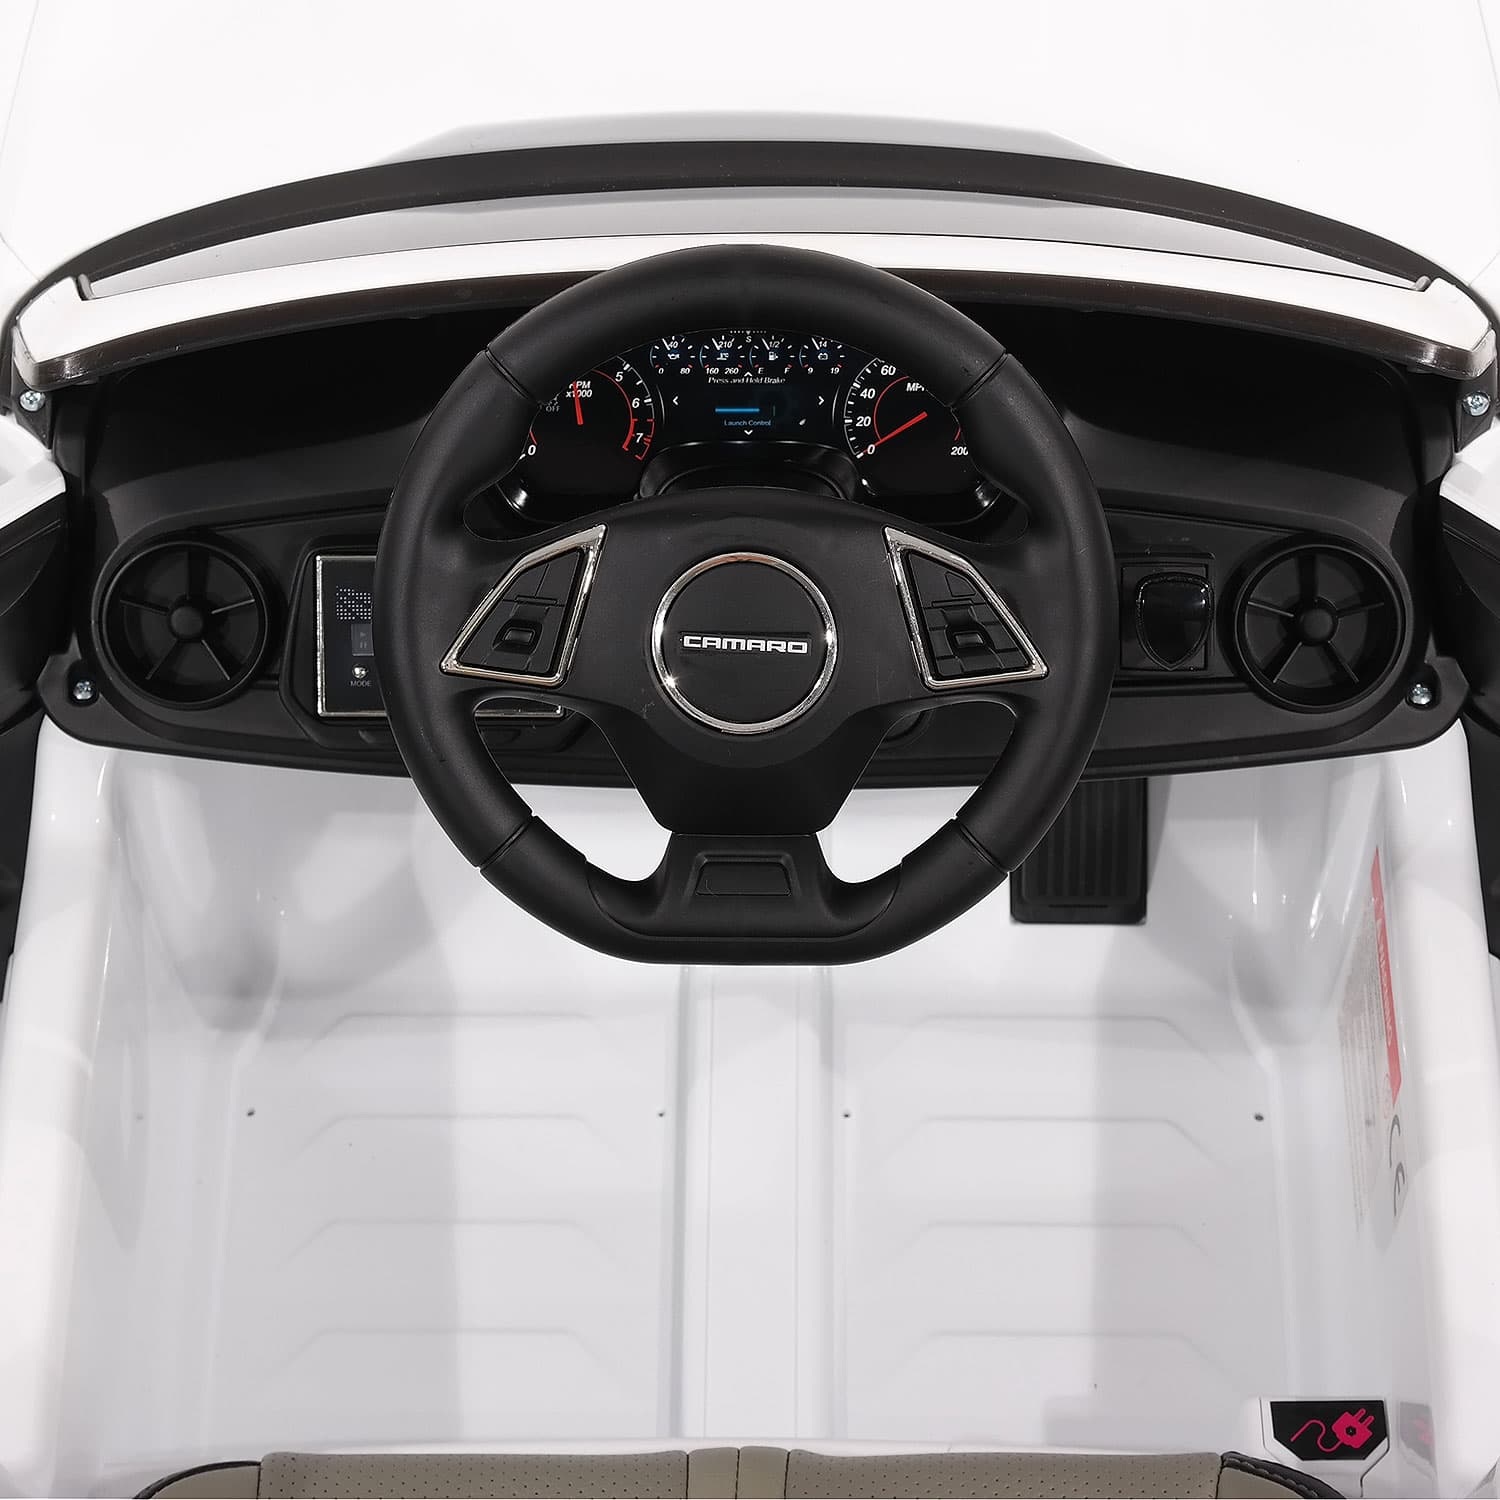 Chevrolet Camaro Ss 12v Kids Ride-on Car With Parental Remote Control | White